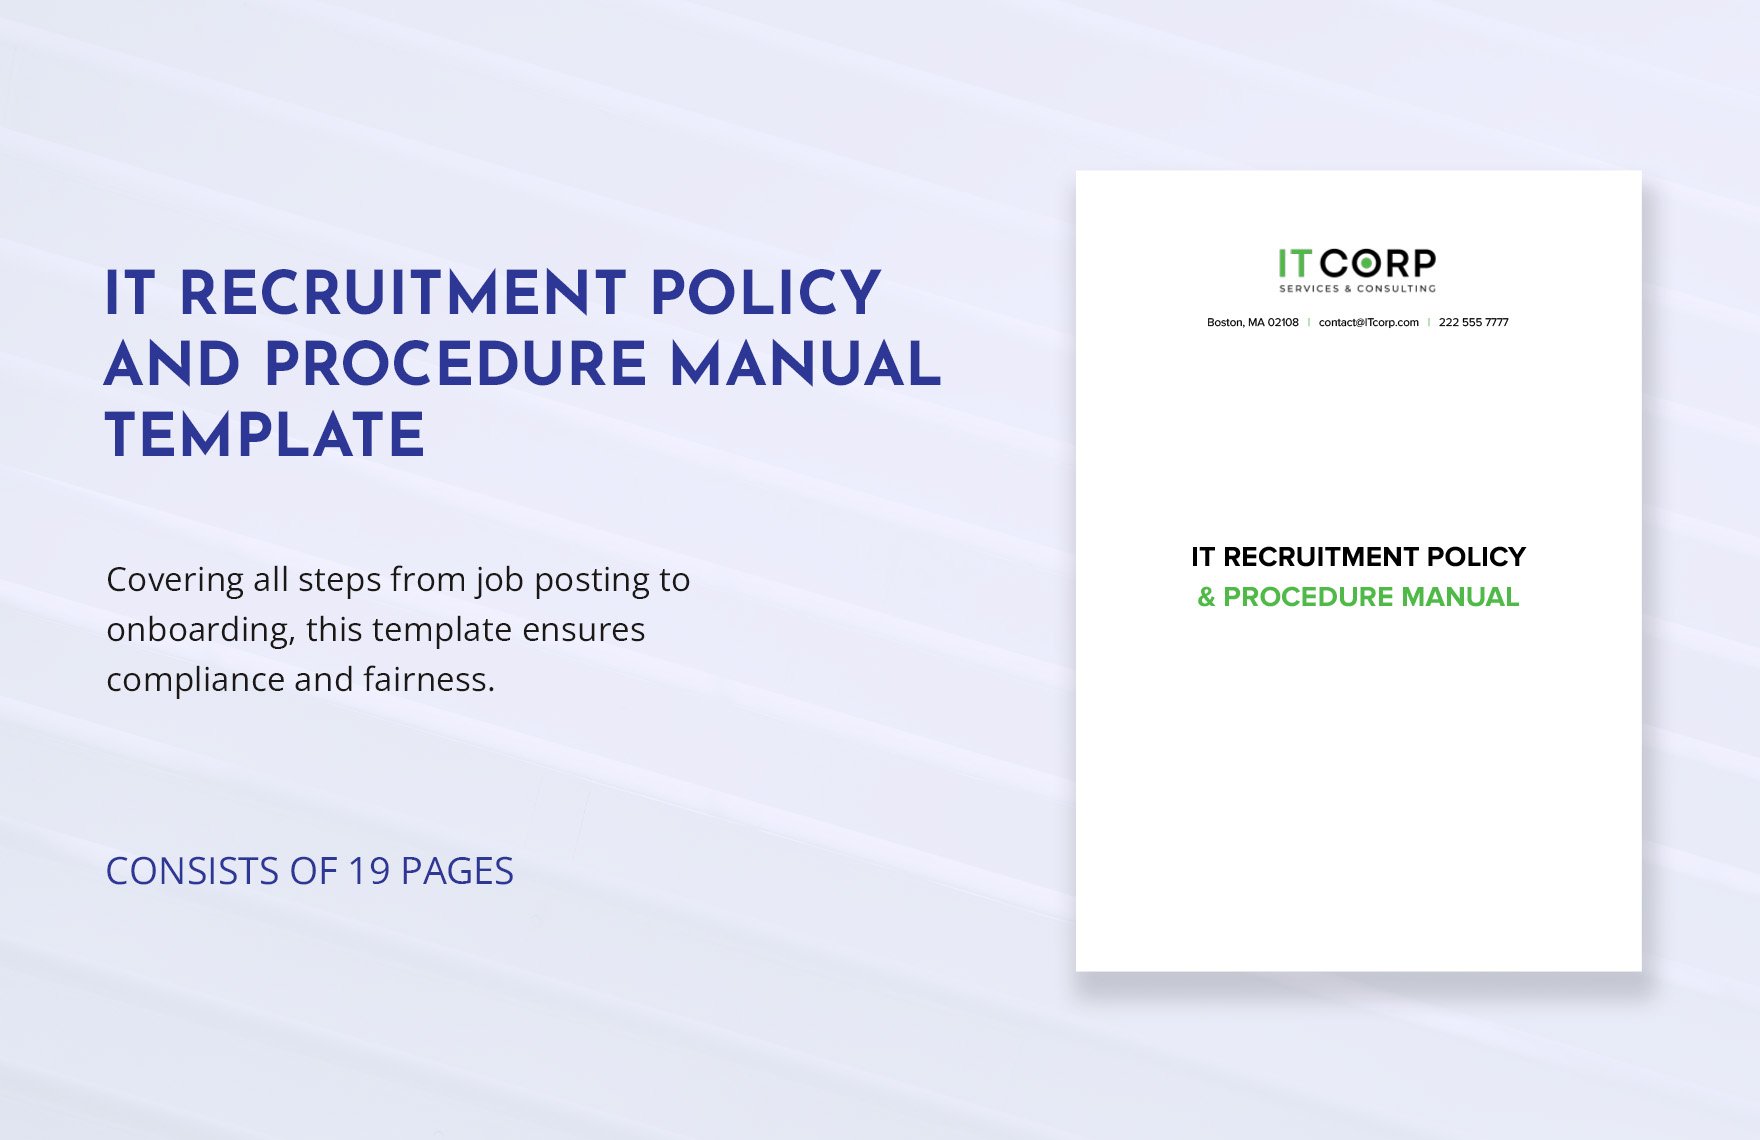 IT Recruitment Policy & Procedure Manual Template